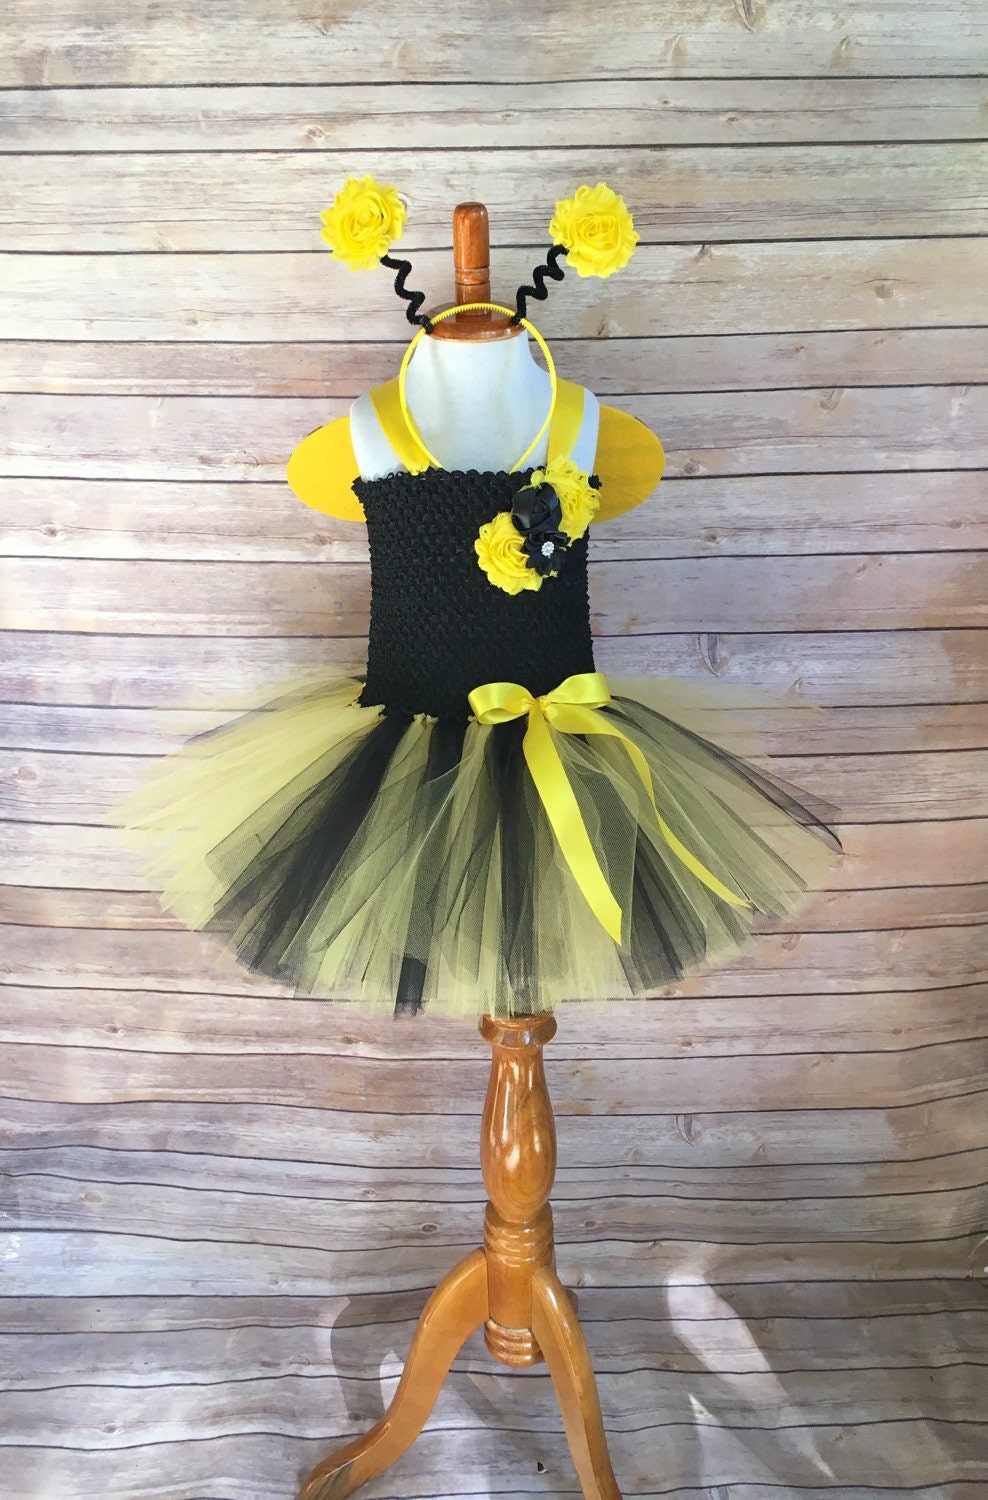 Girls Bee Costume - Complete Bumblebee Kids Costume Set with Tutu